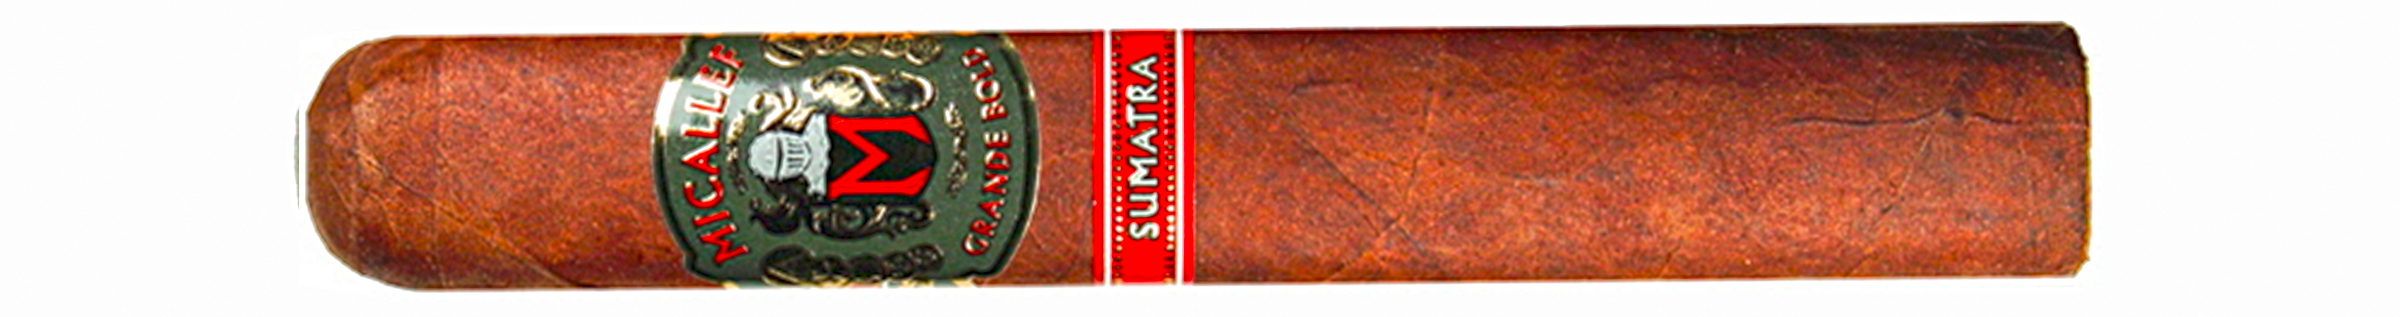 A cigar with Micallef Grande Bold Sumatra label